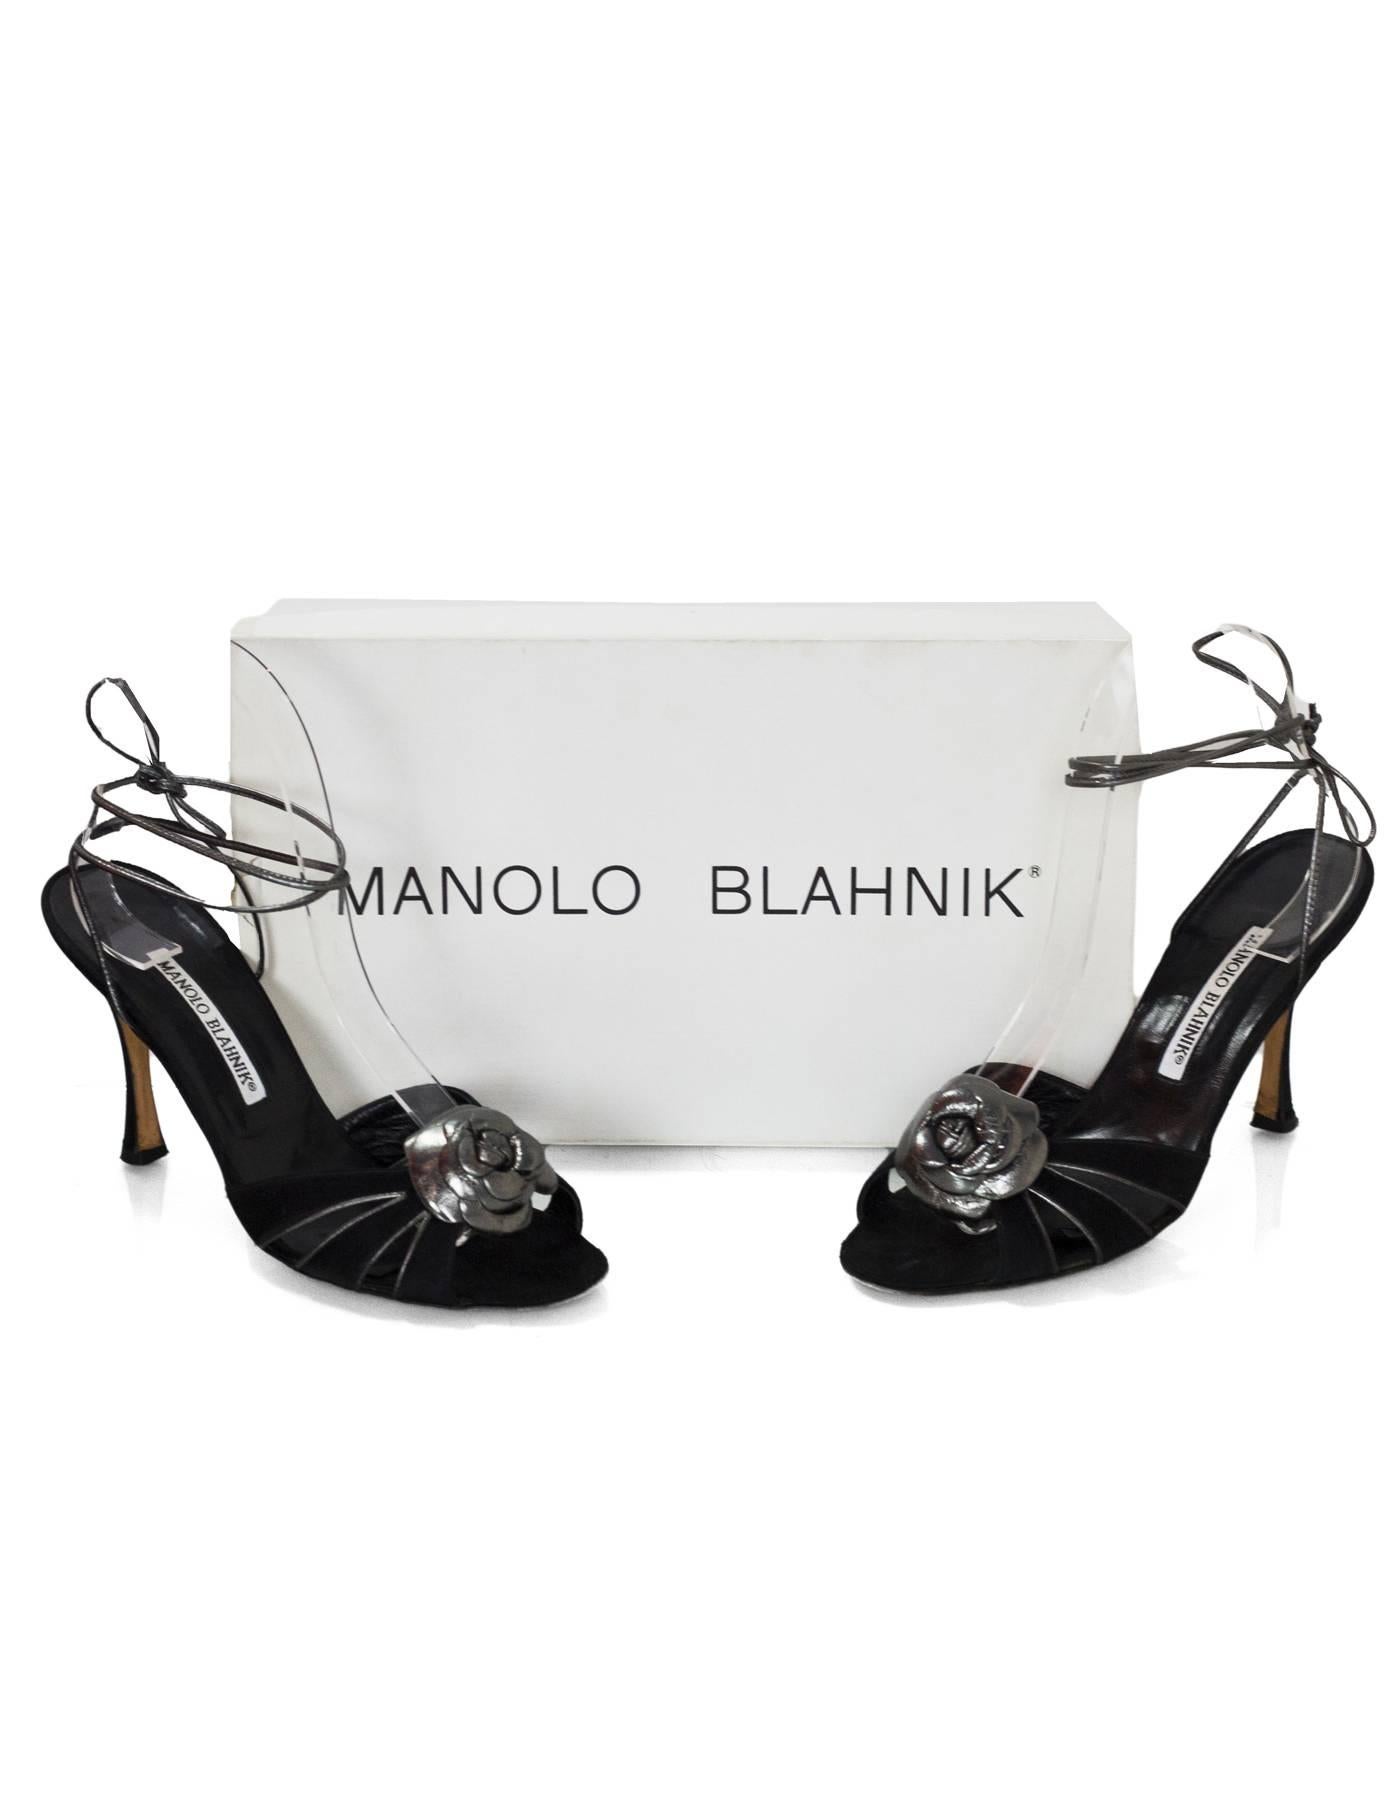 Manolo Blahnik Black & Graphite Flower Sandals Sz 36.5 with Box 2